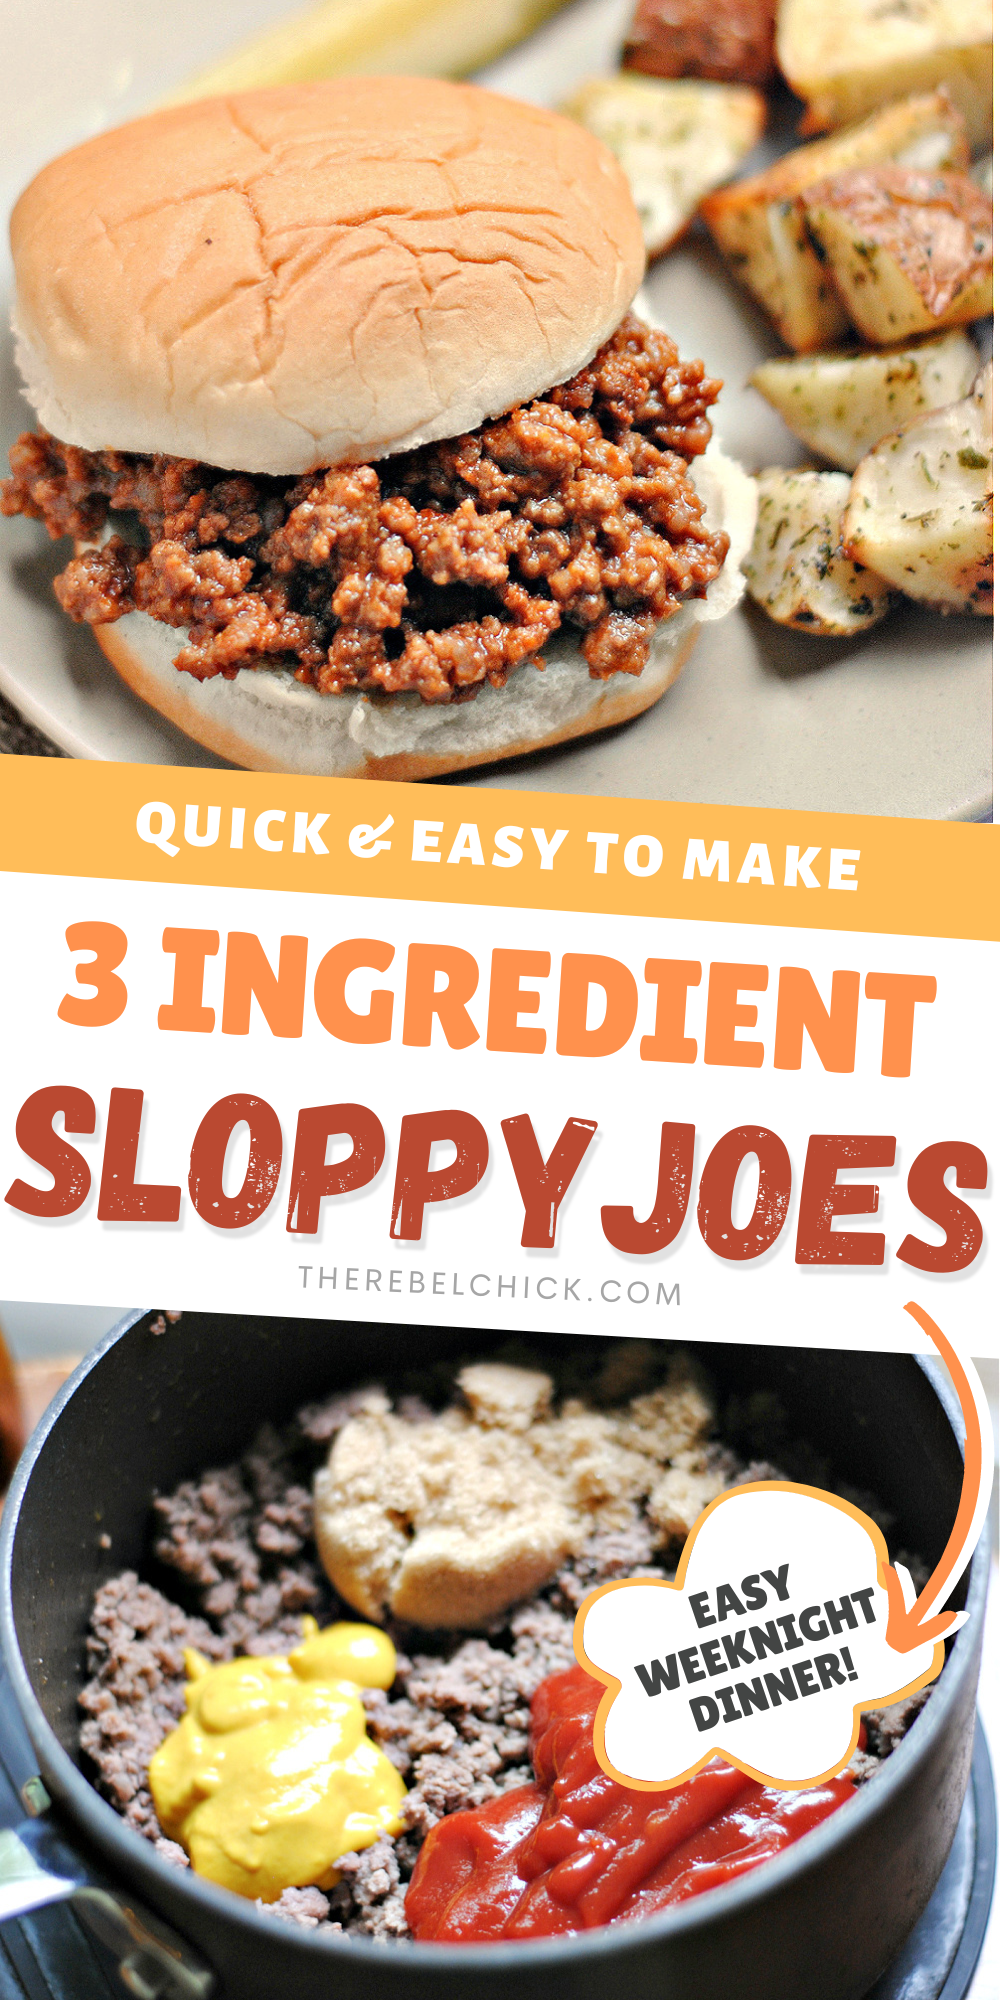 Easy to Make 3 Ingredient Sloppy Joes Recipe